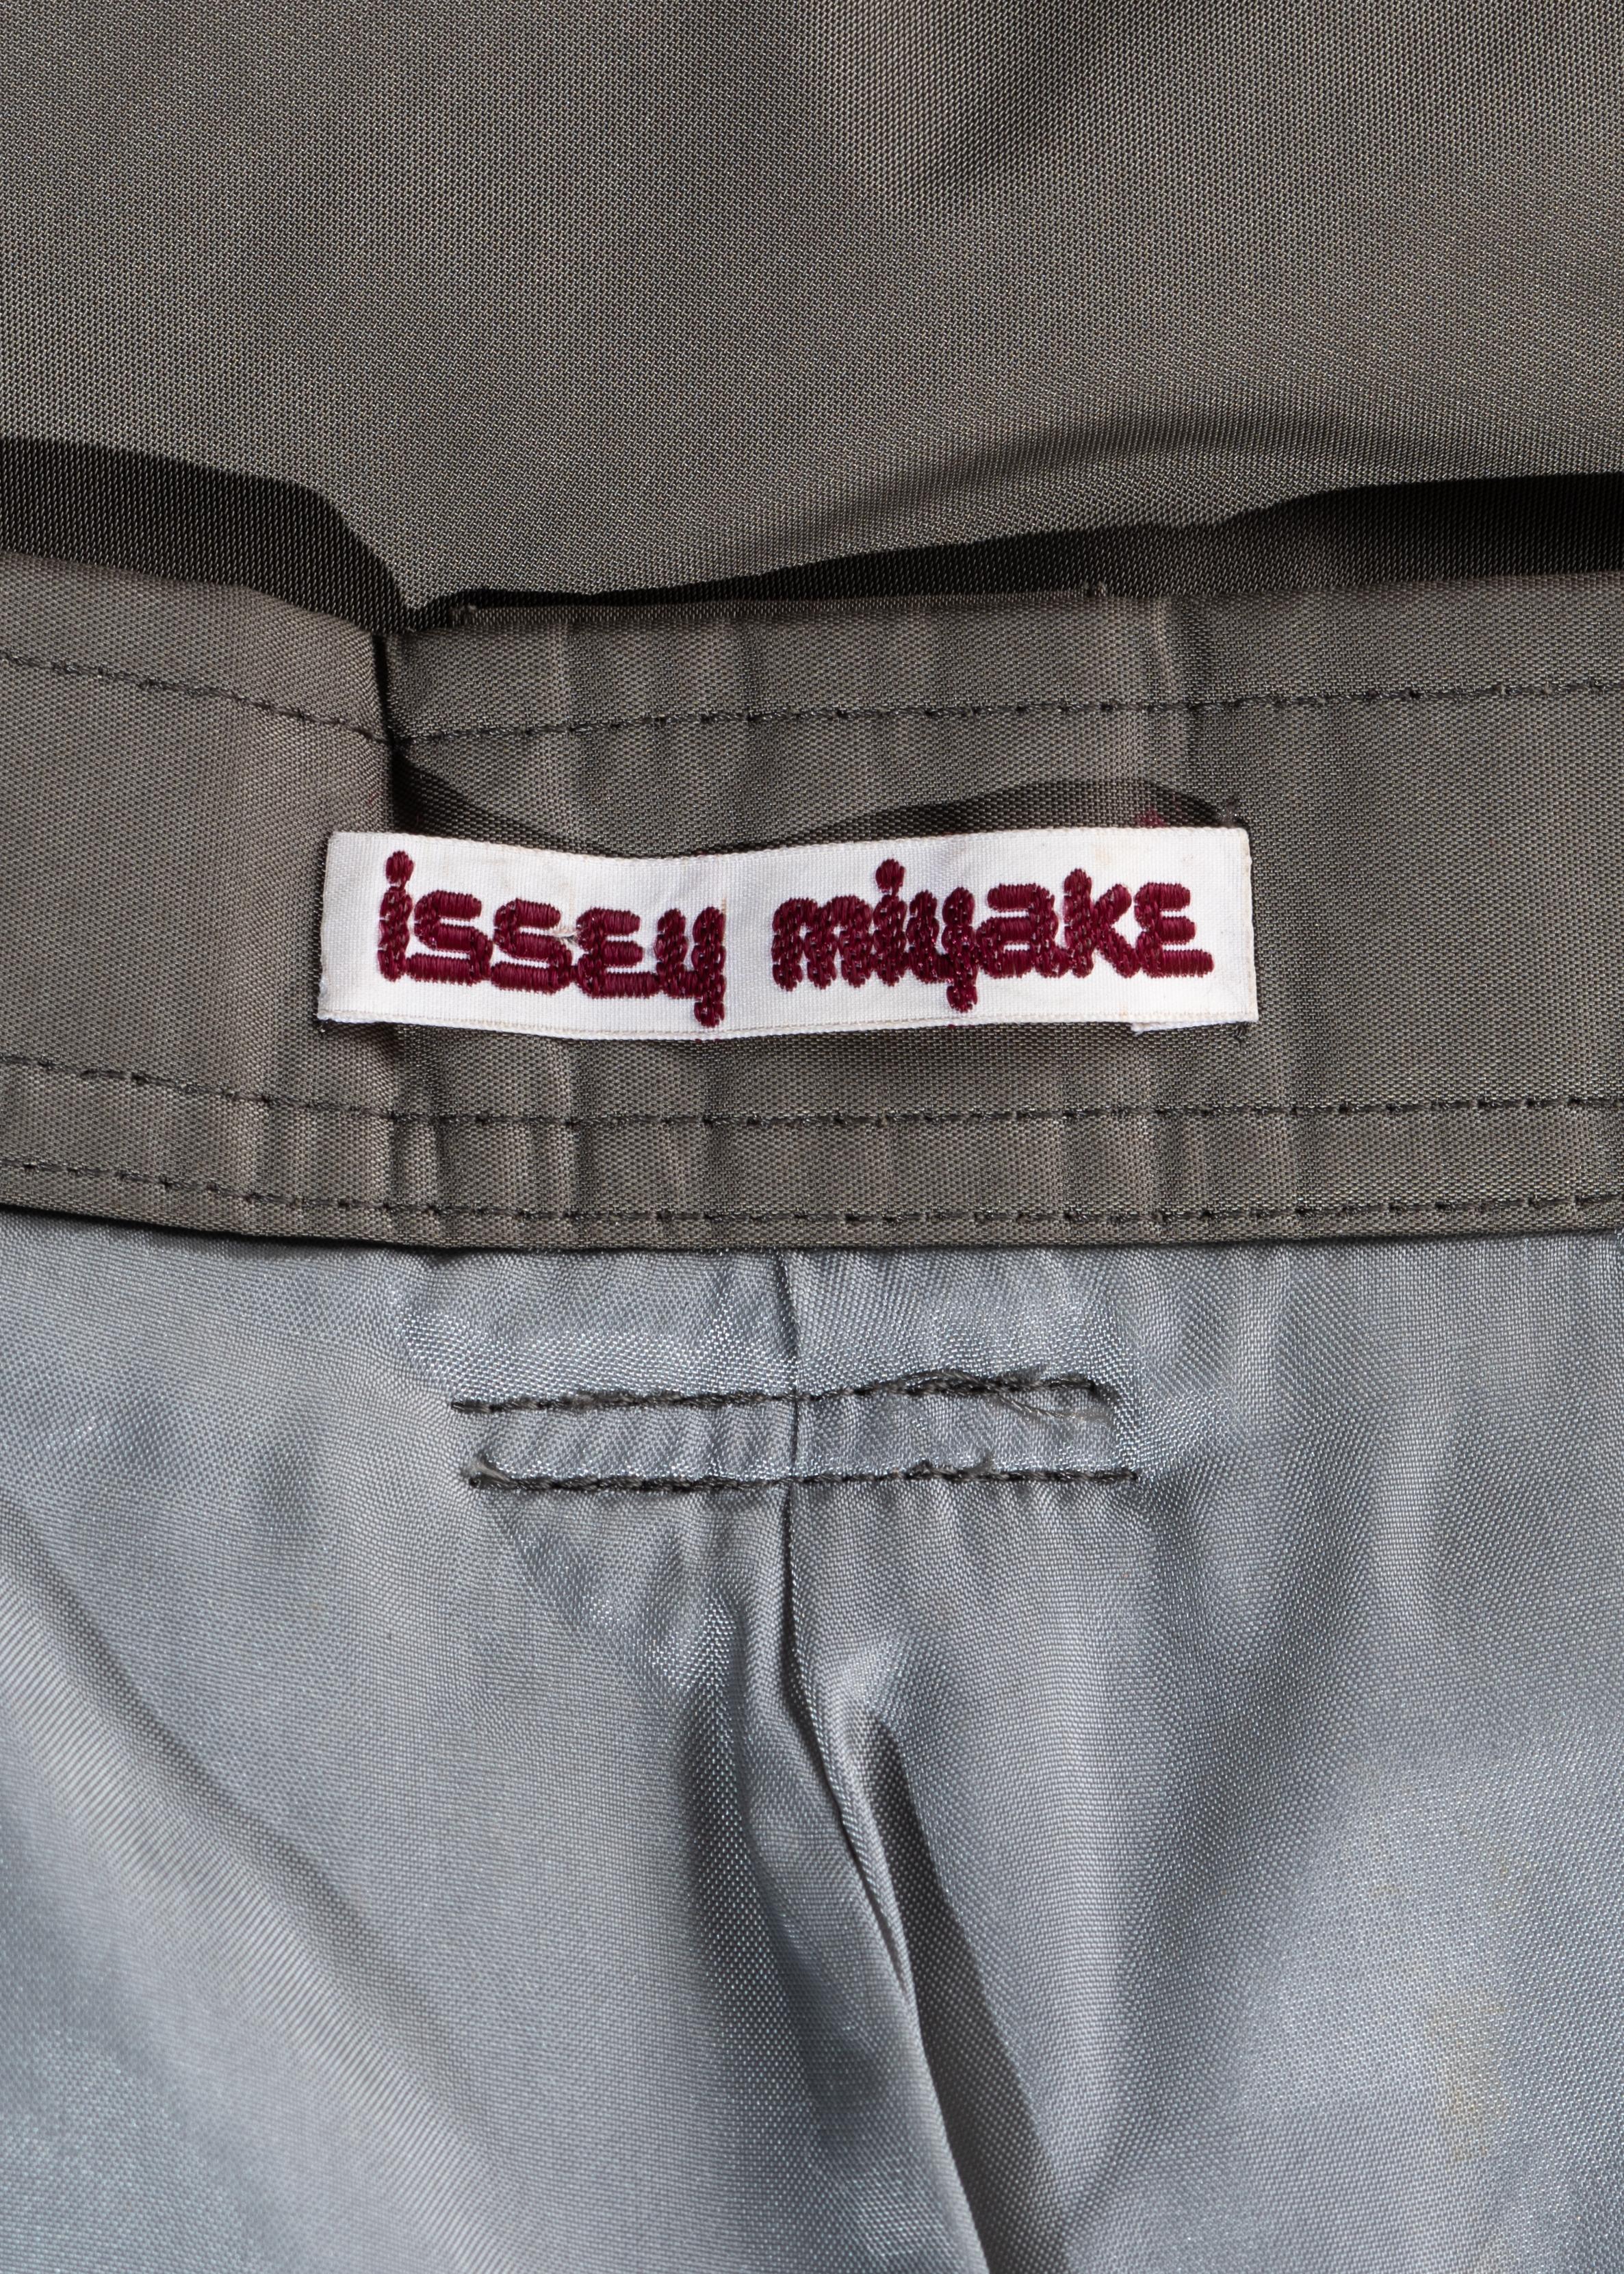 Women's Issey Miyake olive nylon high-waisted parachute pants, fw 1982